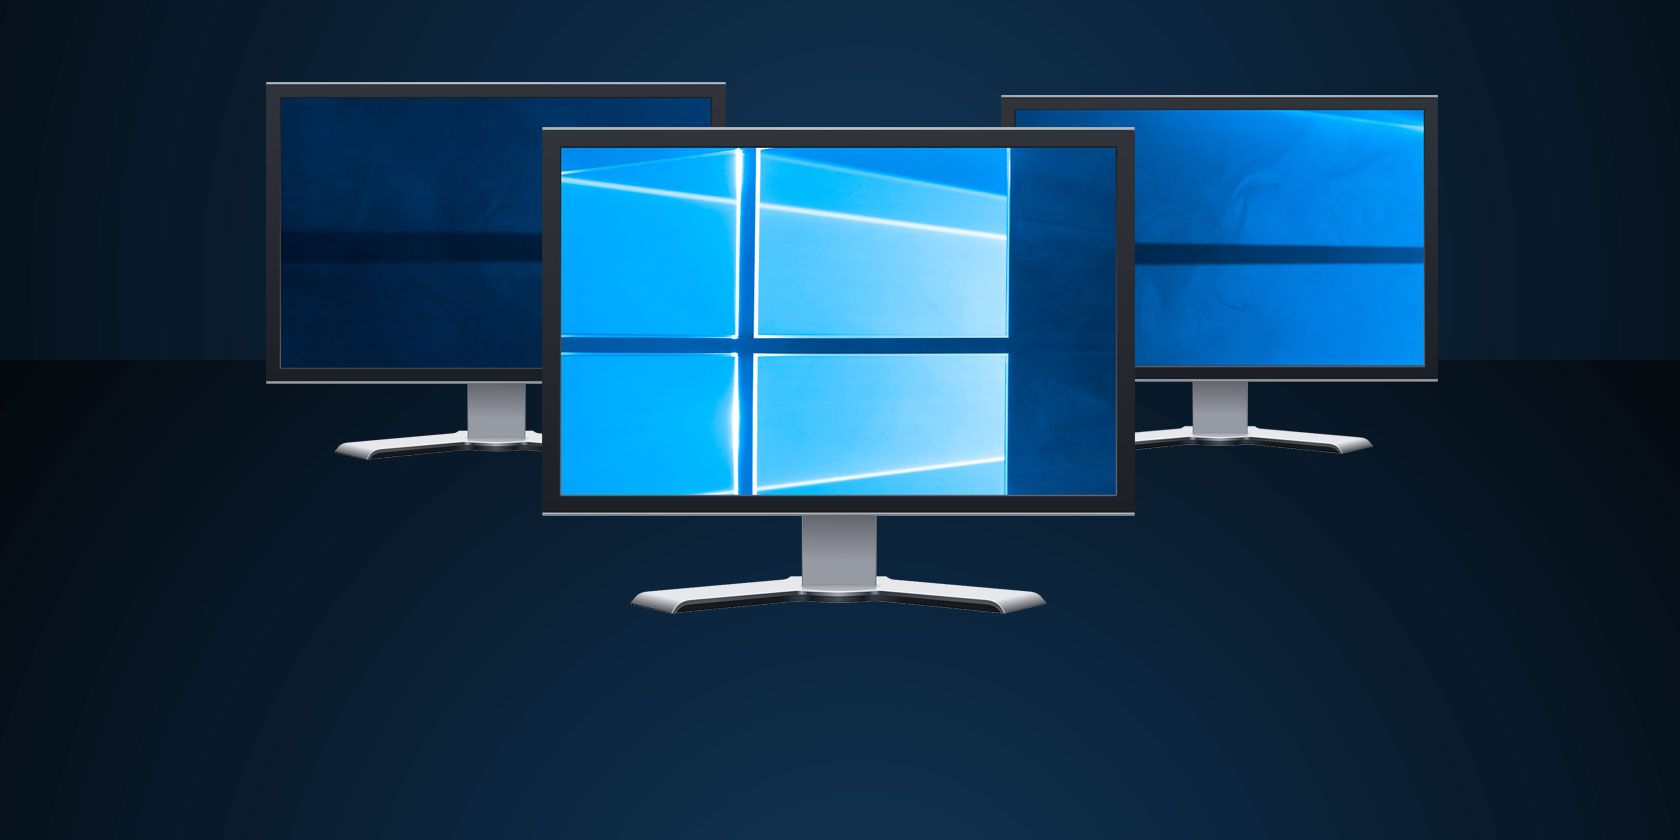 windows 10 share file monitor free